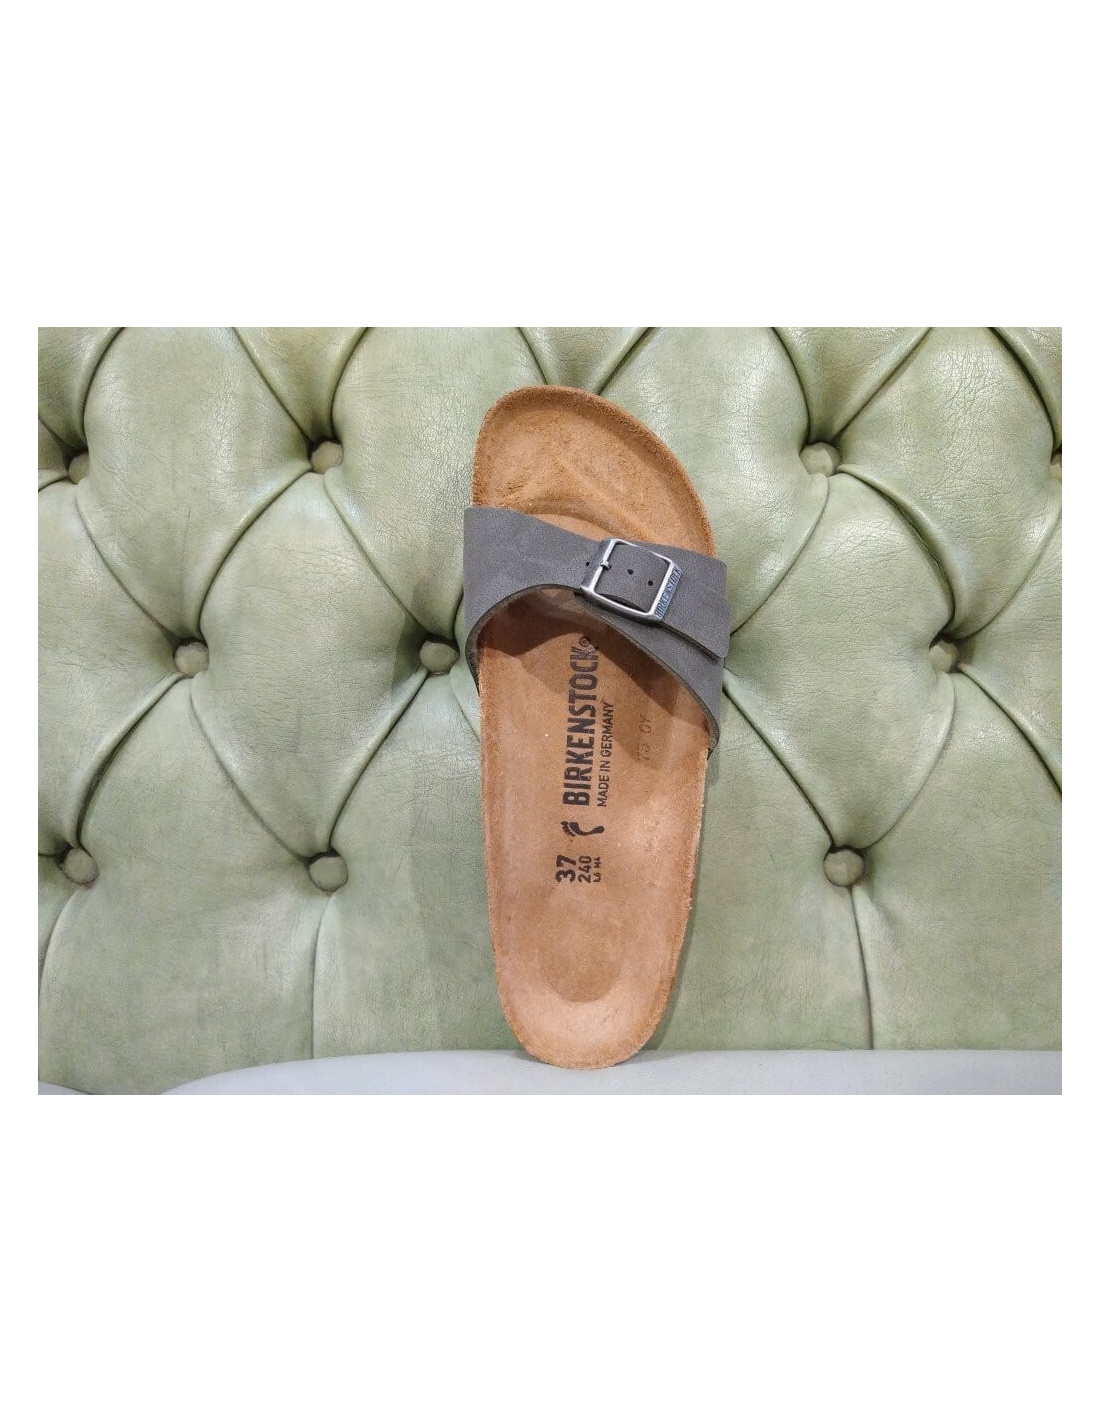 Birkenstock Madrid Narrow Fit Leather Sandals on SALE